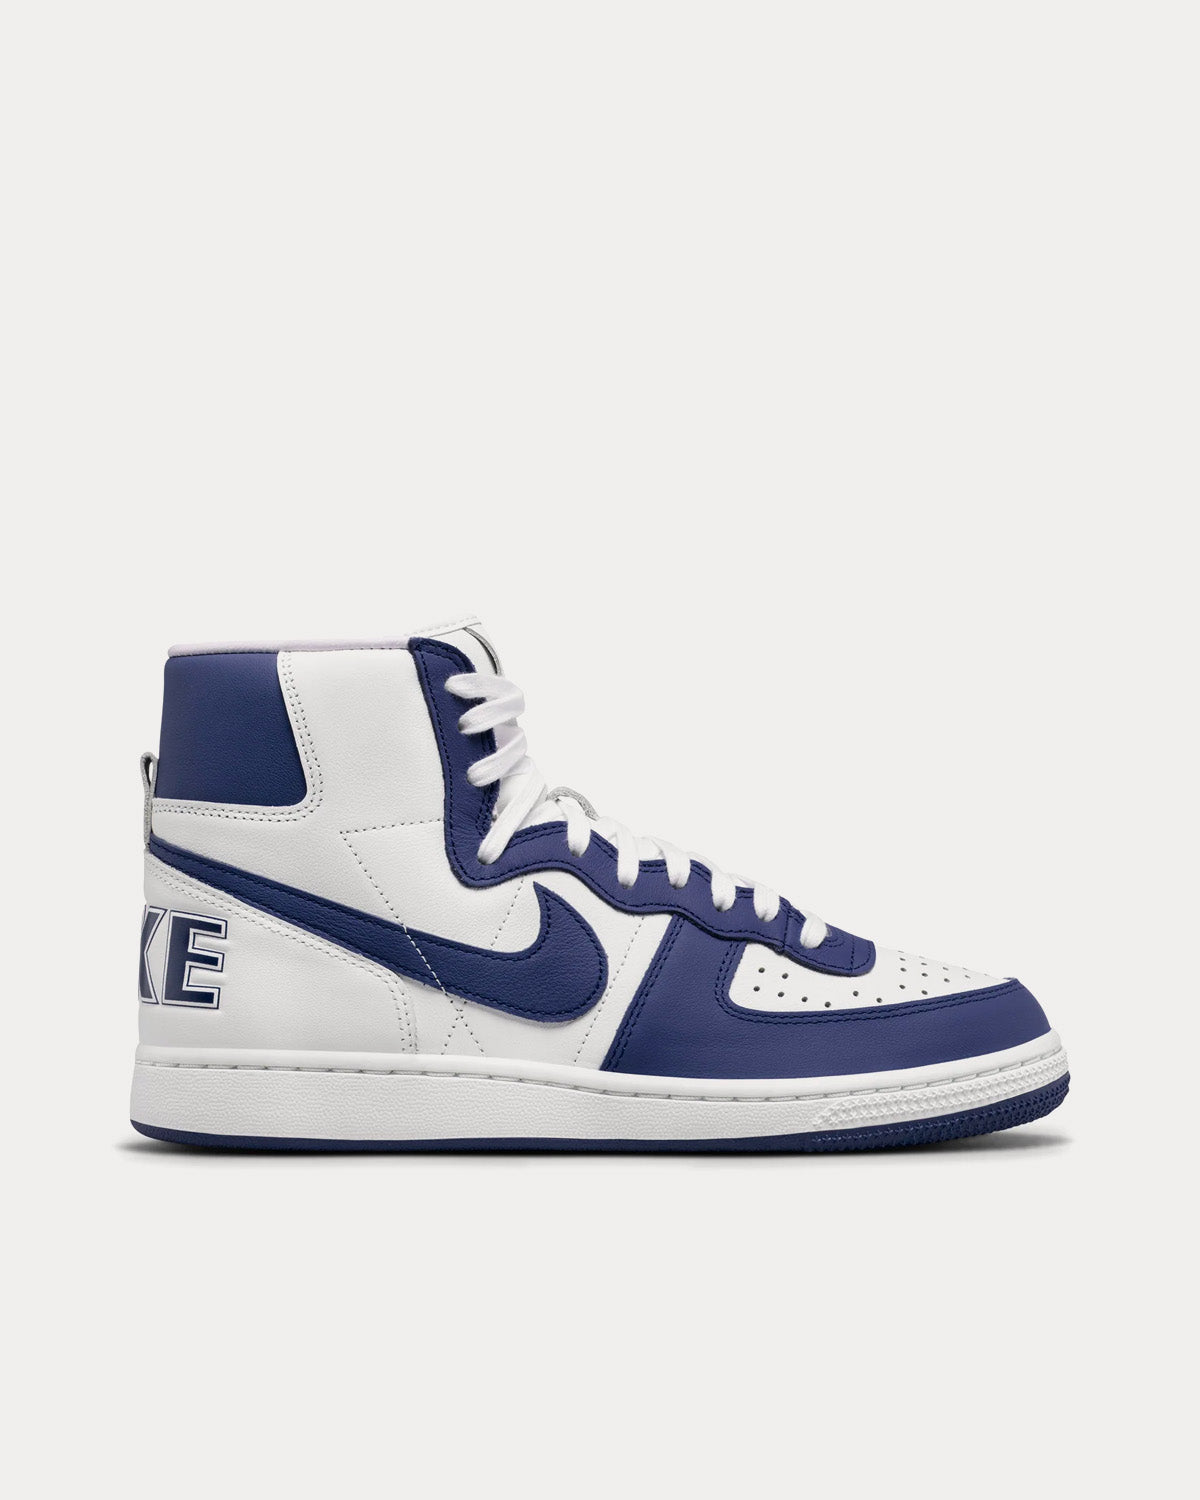 Nike x Comme des Garçons - Terminator Blue / White High Top Sneakers